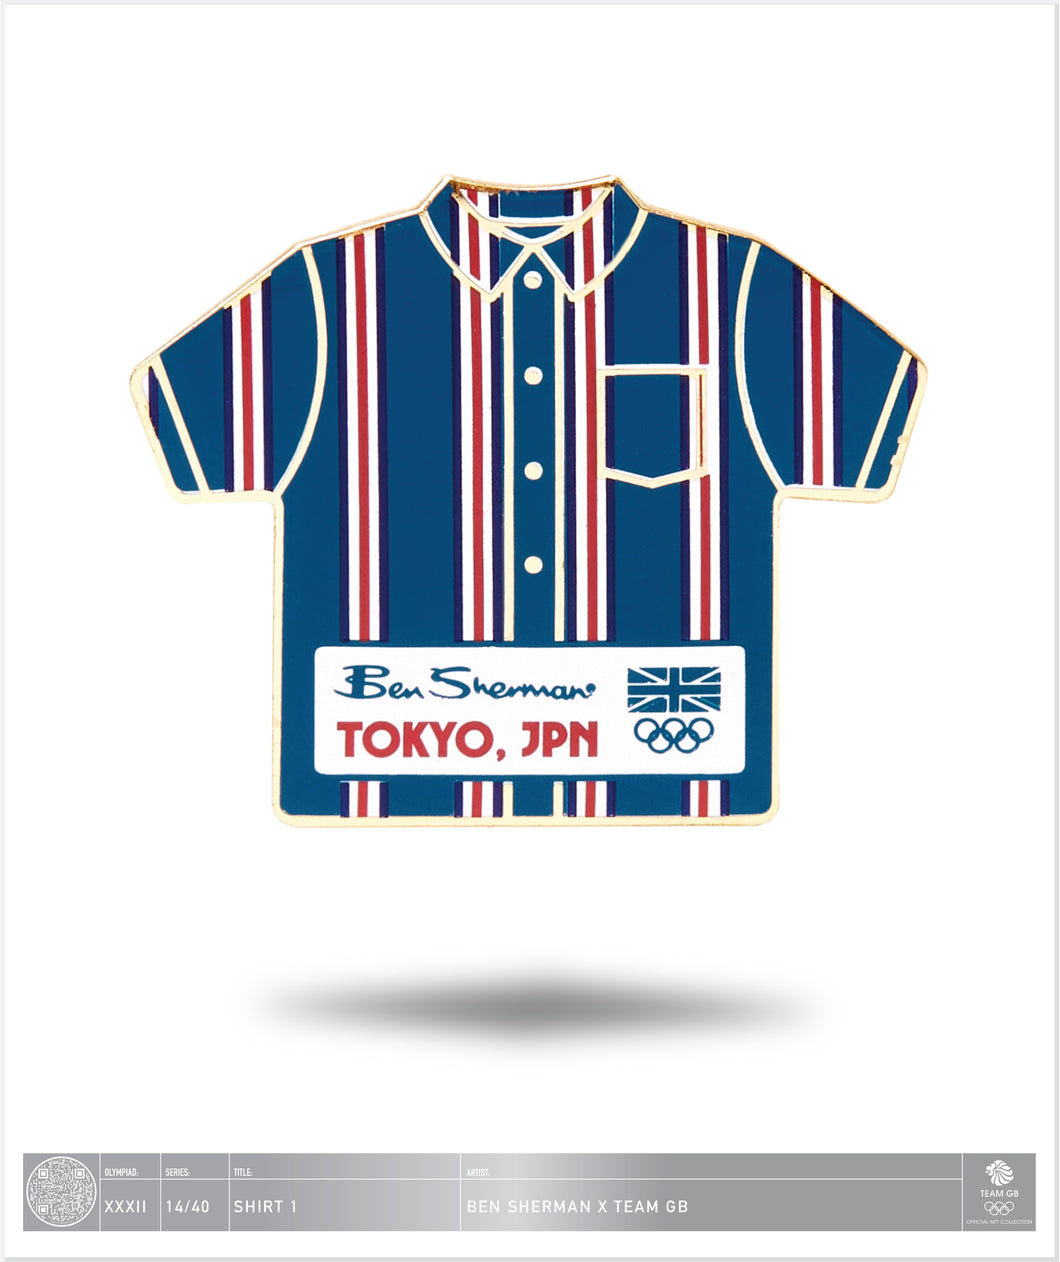 Ben Sherman Tokyo - Shirt 1 - 14 / 40